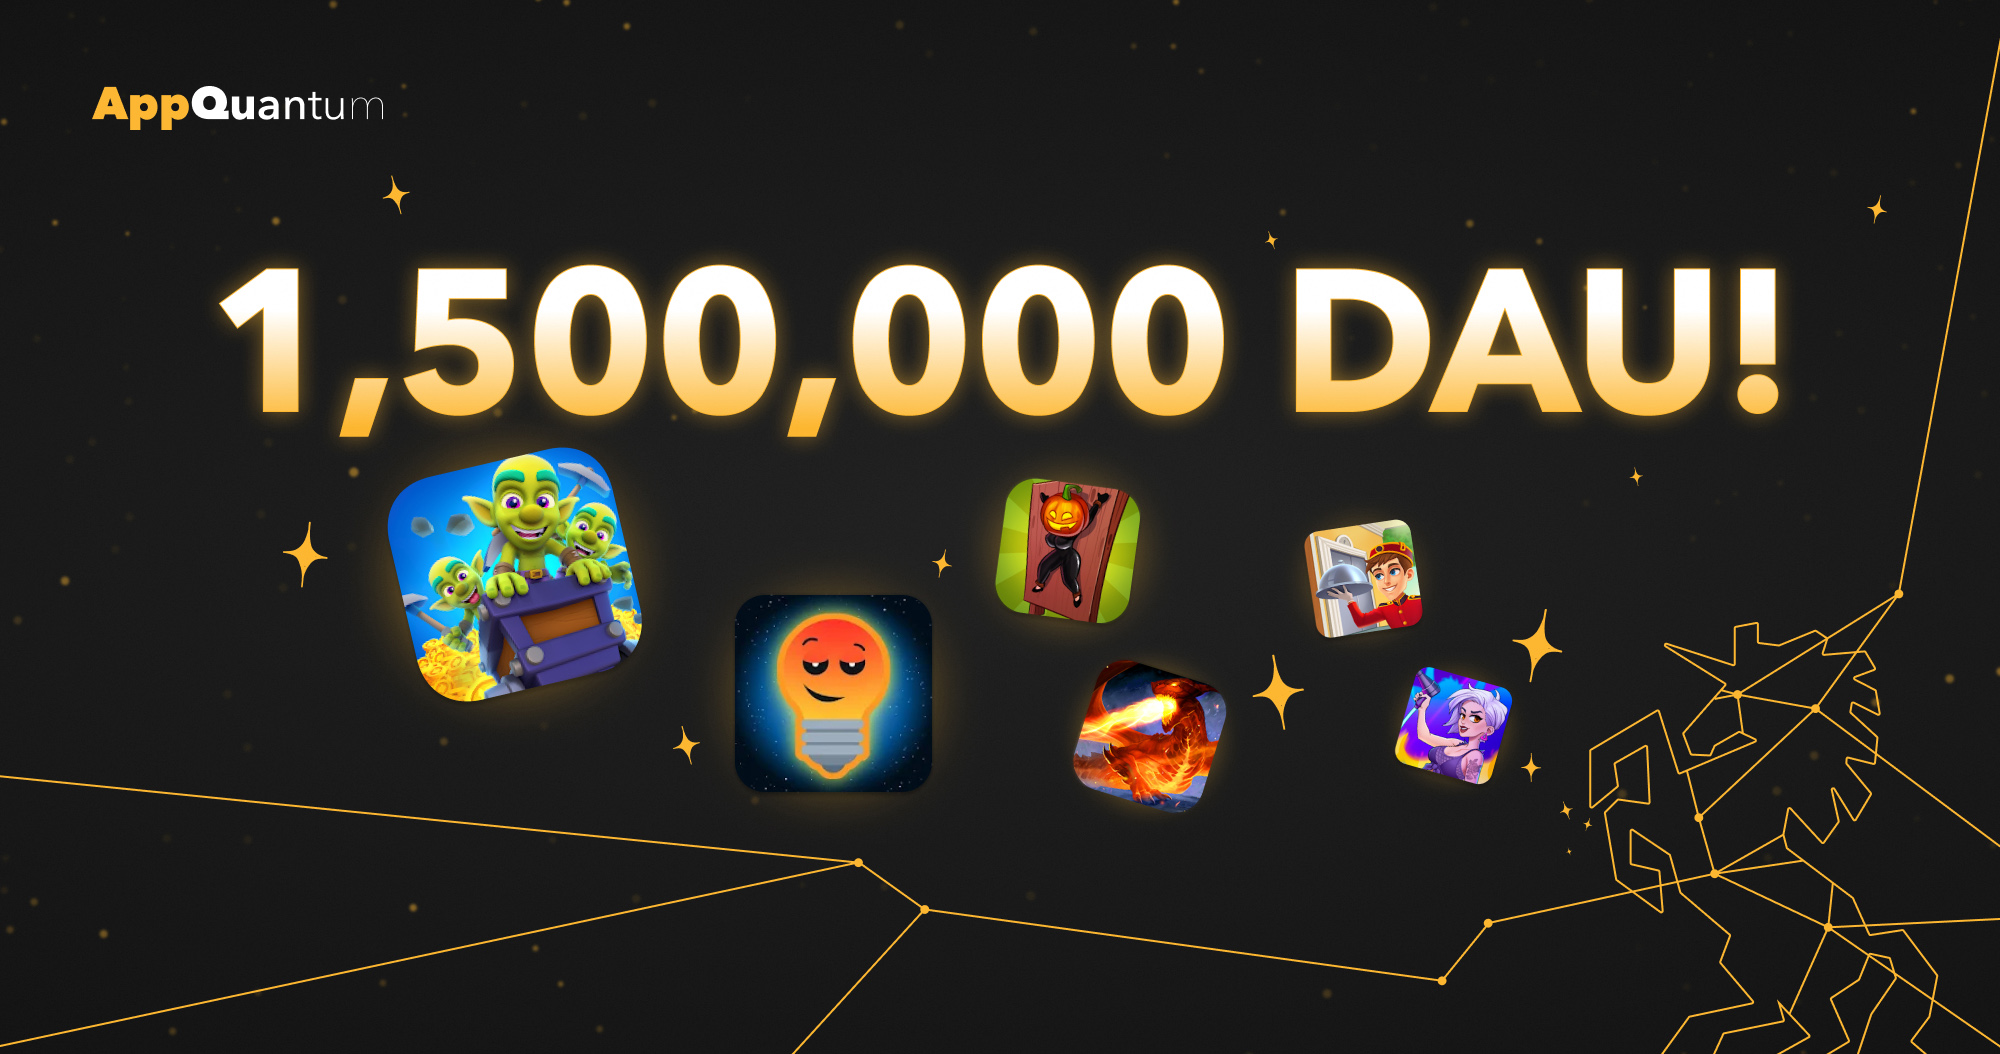 AppQuantum's Games Have Reached 1,500,000 DAU! 